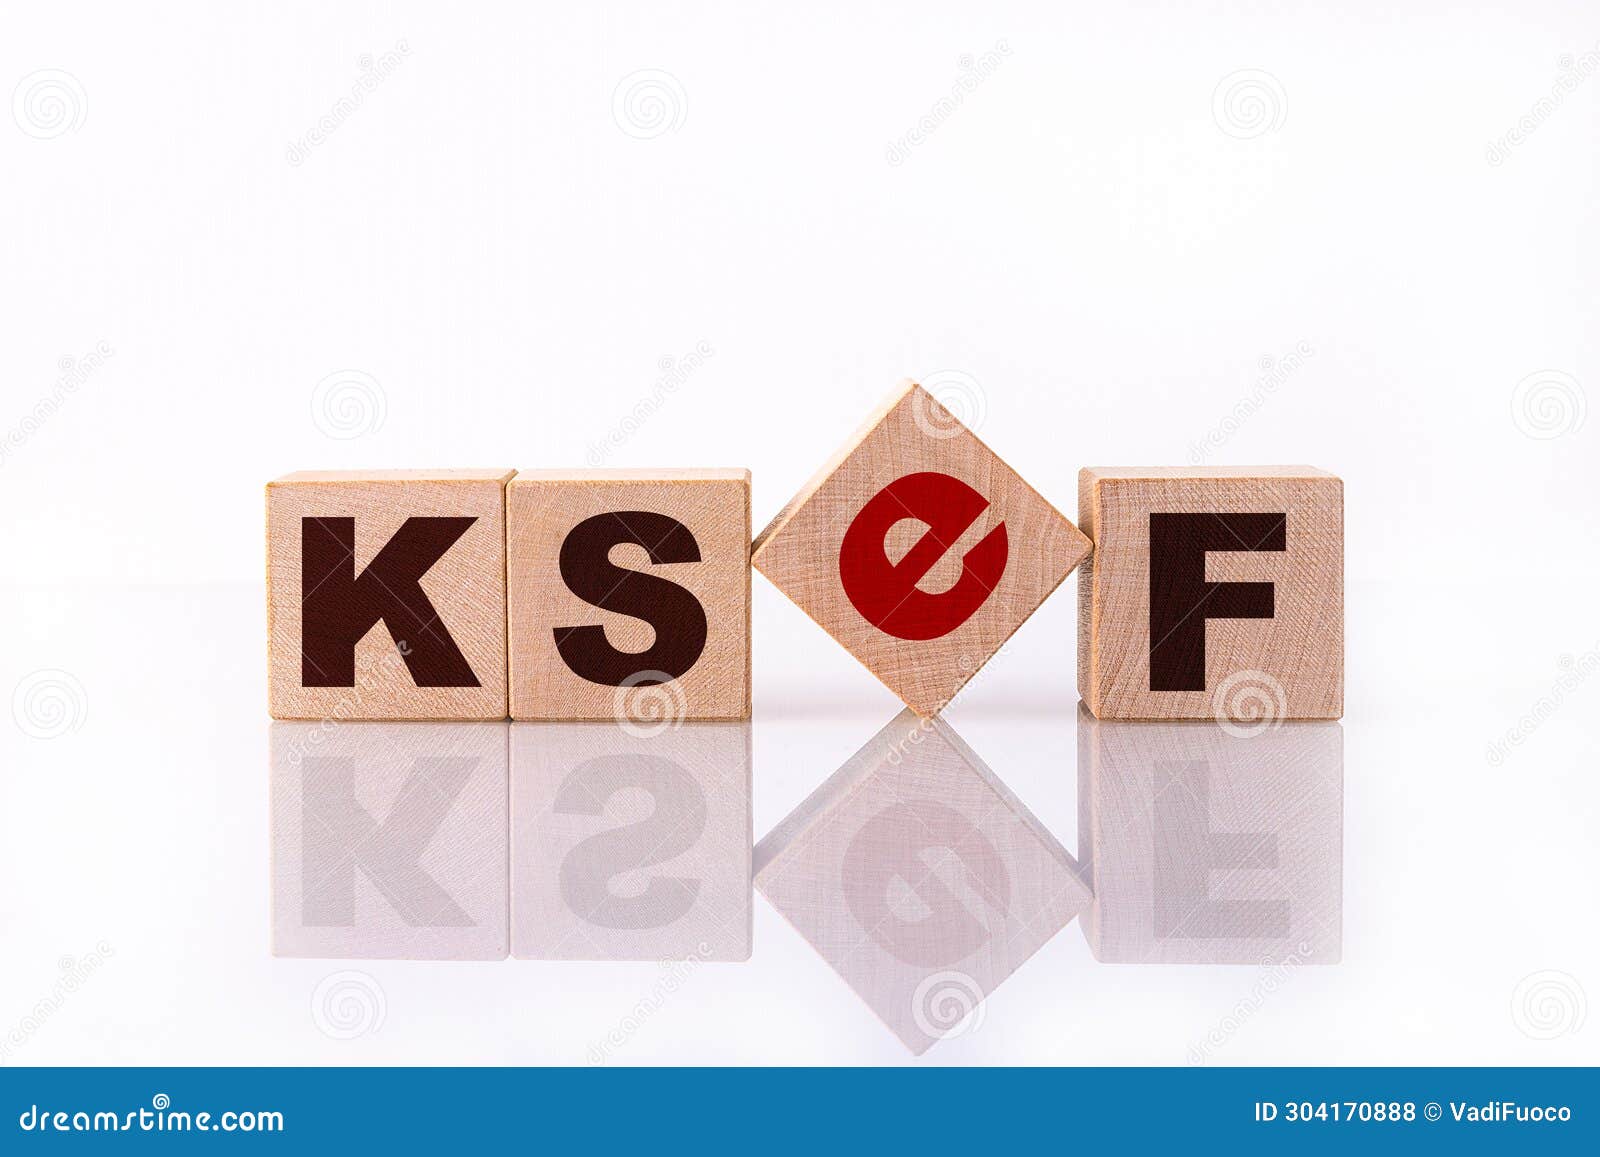 ksef, krajowy system e faktur, text written on wooden cubes